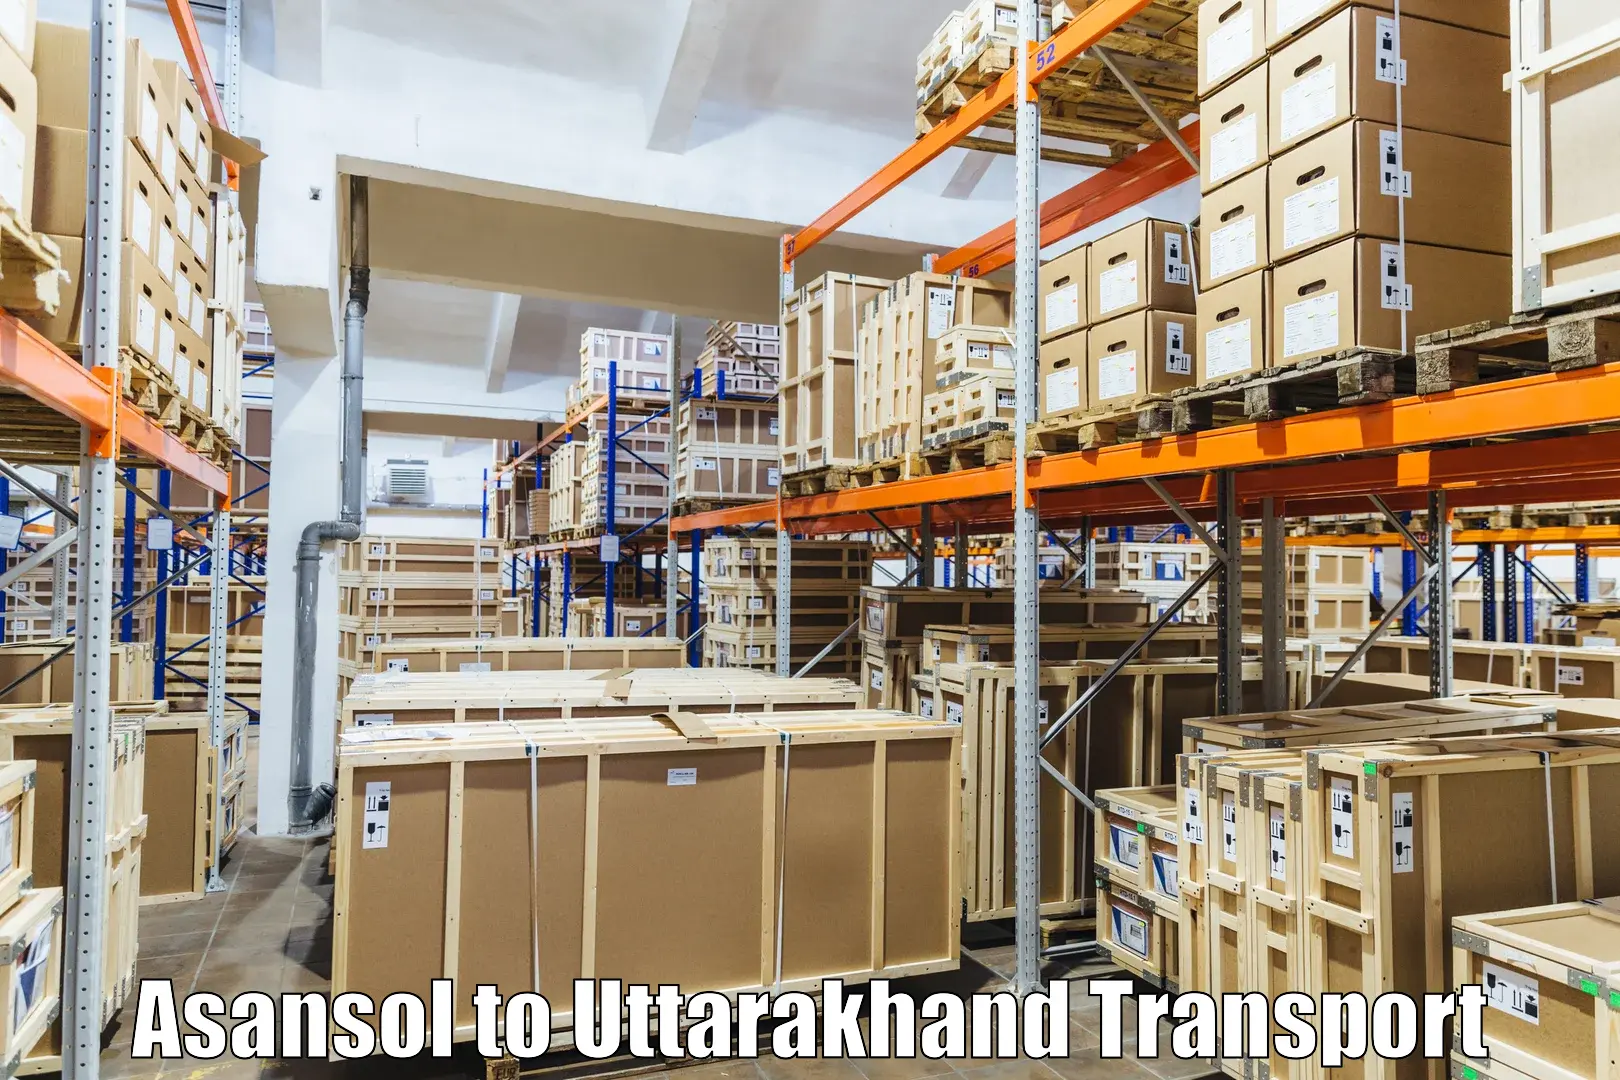 Transport in sharing Asansol to Uttarakhand